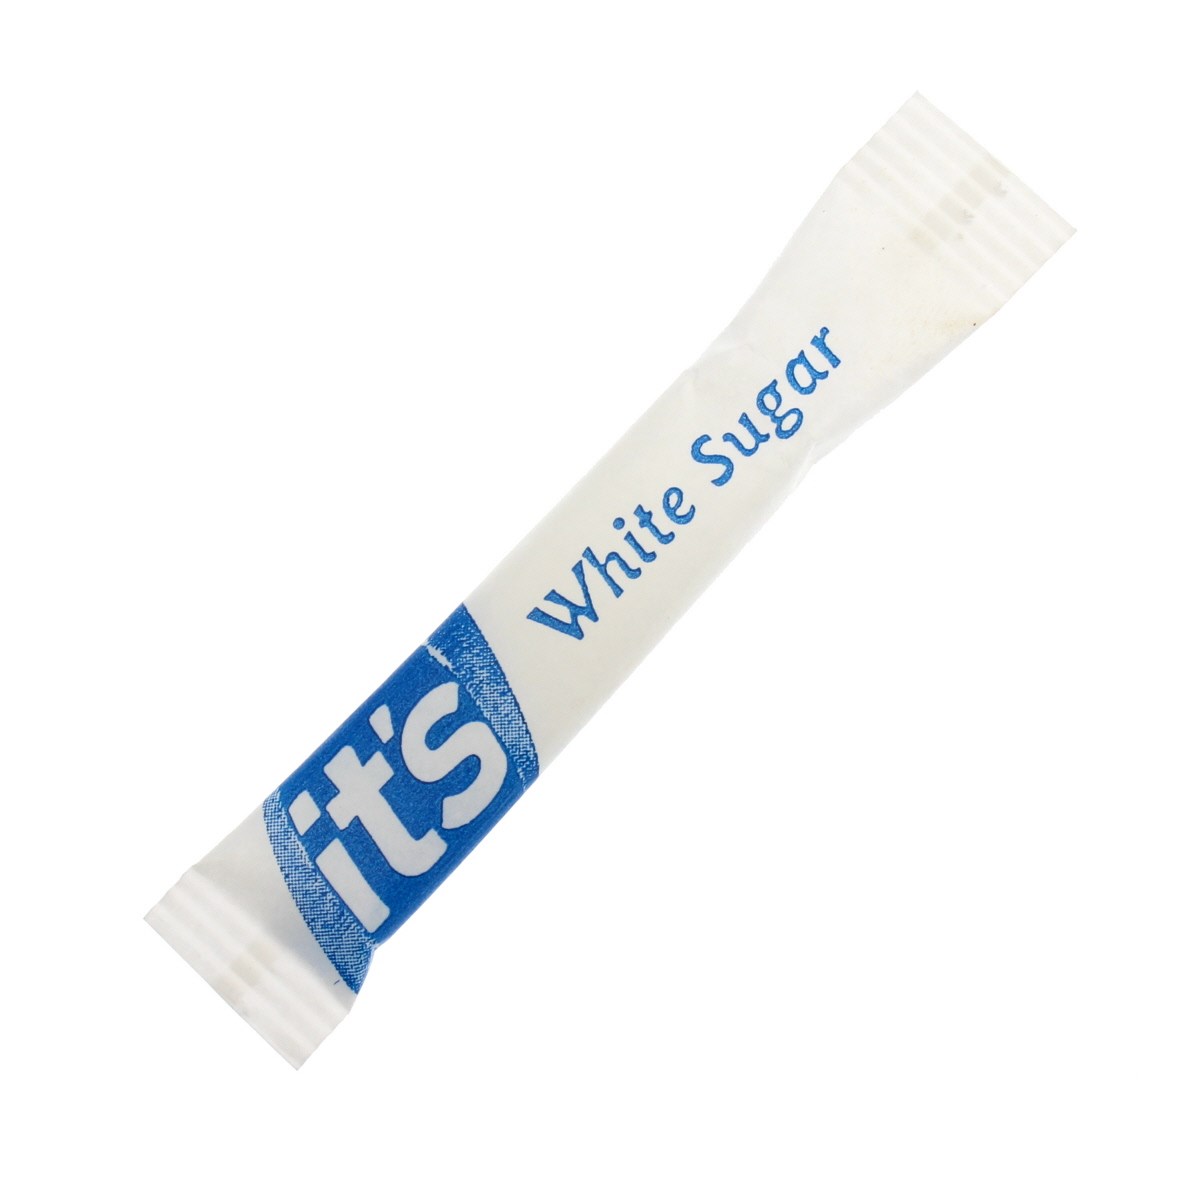 It’s White Sugar Sticks